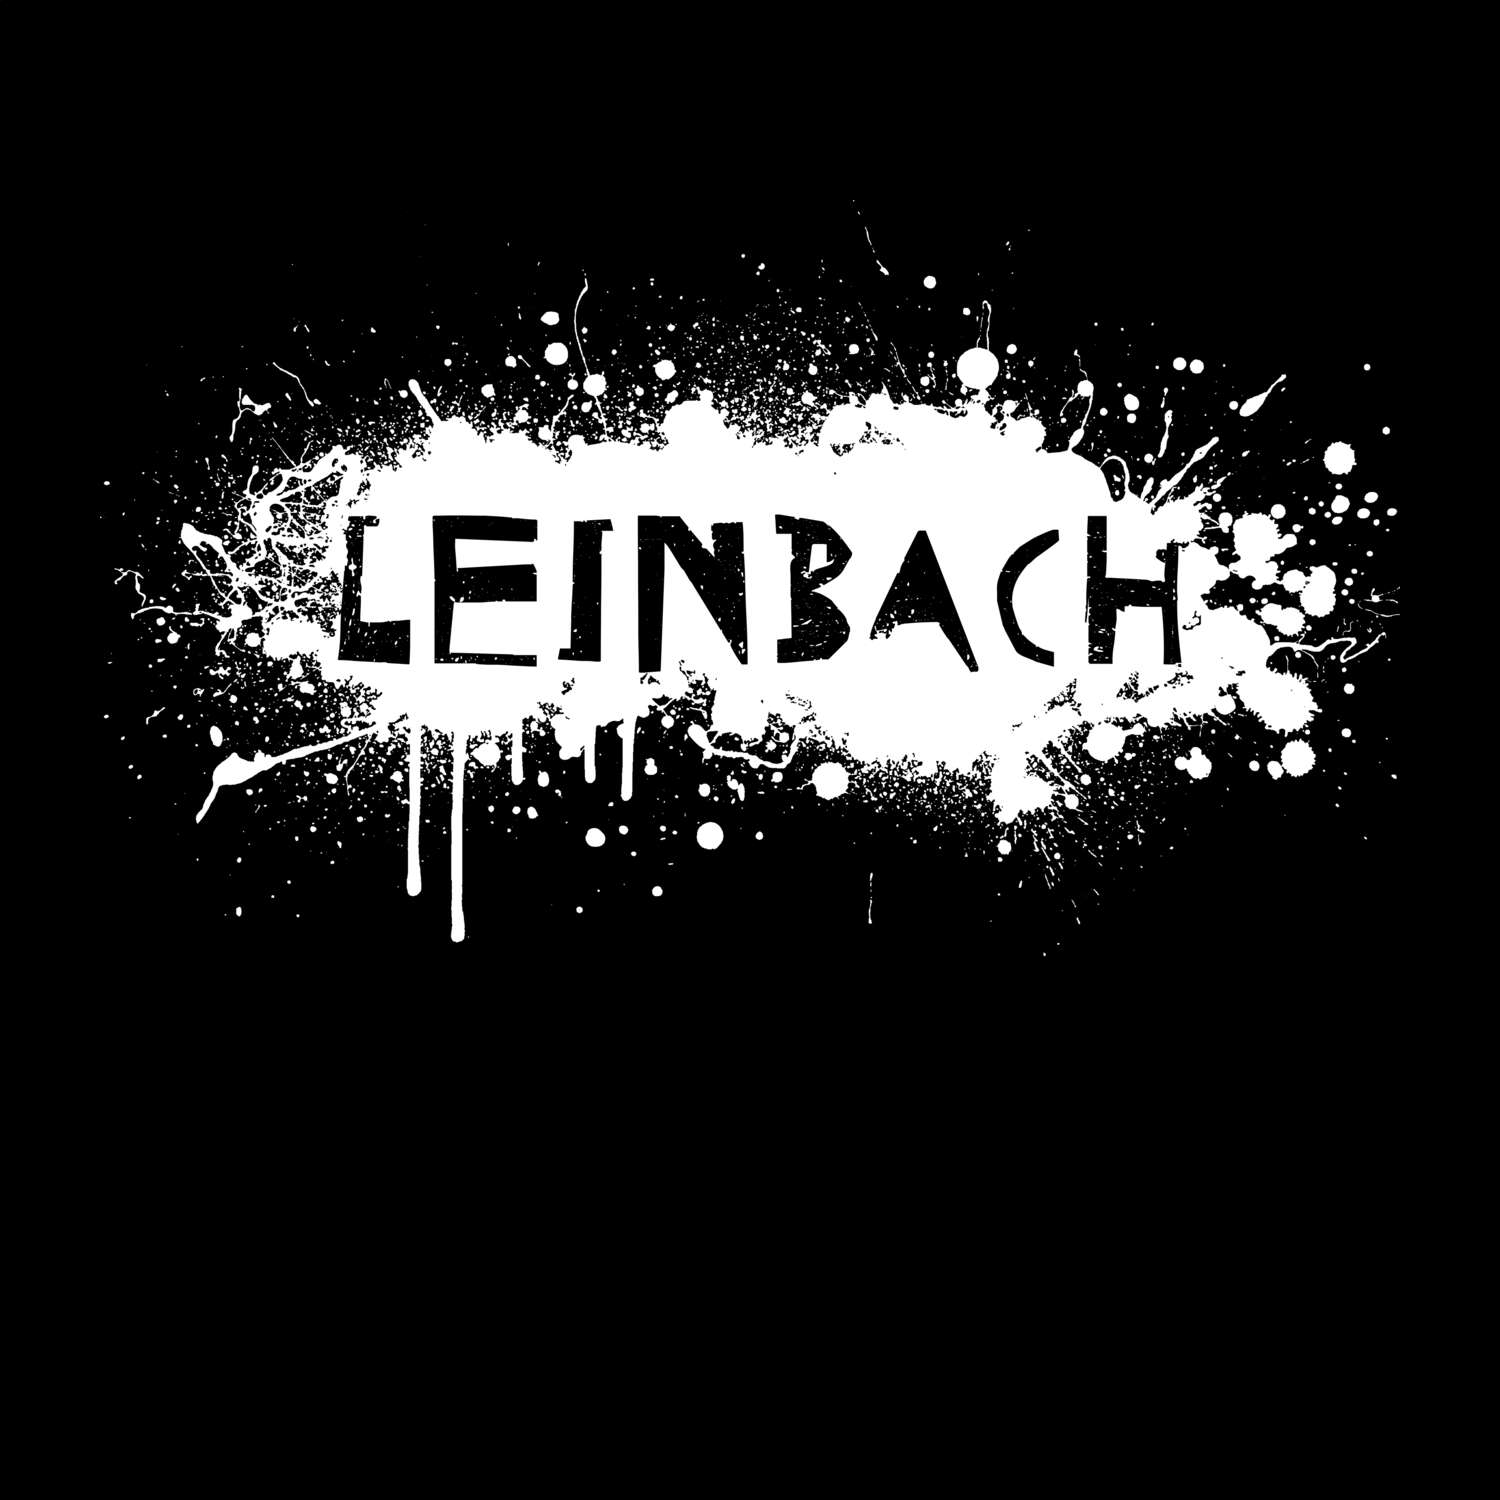 Leinbach T-Shirt »Paint Splash Punk«